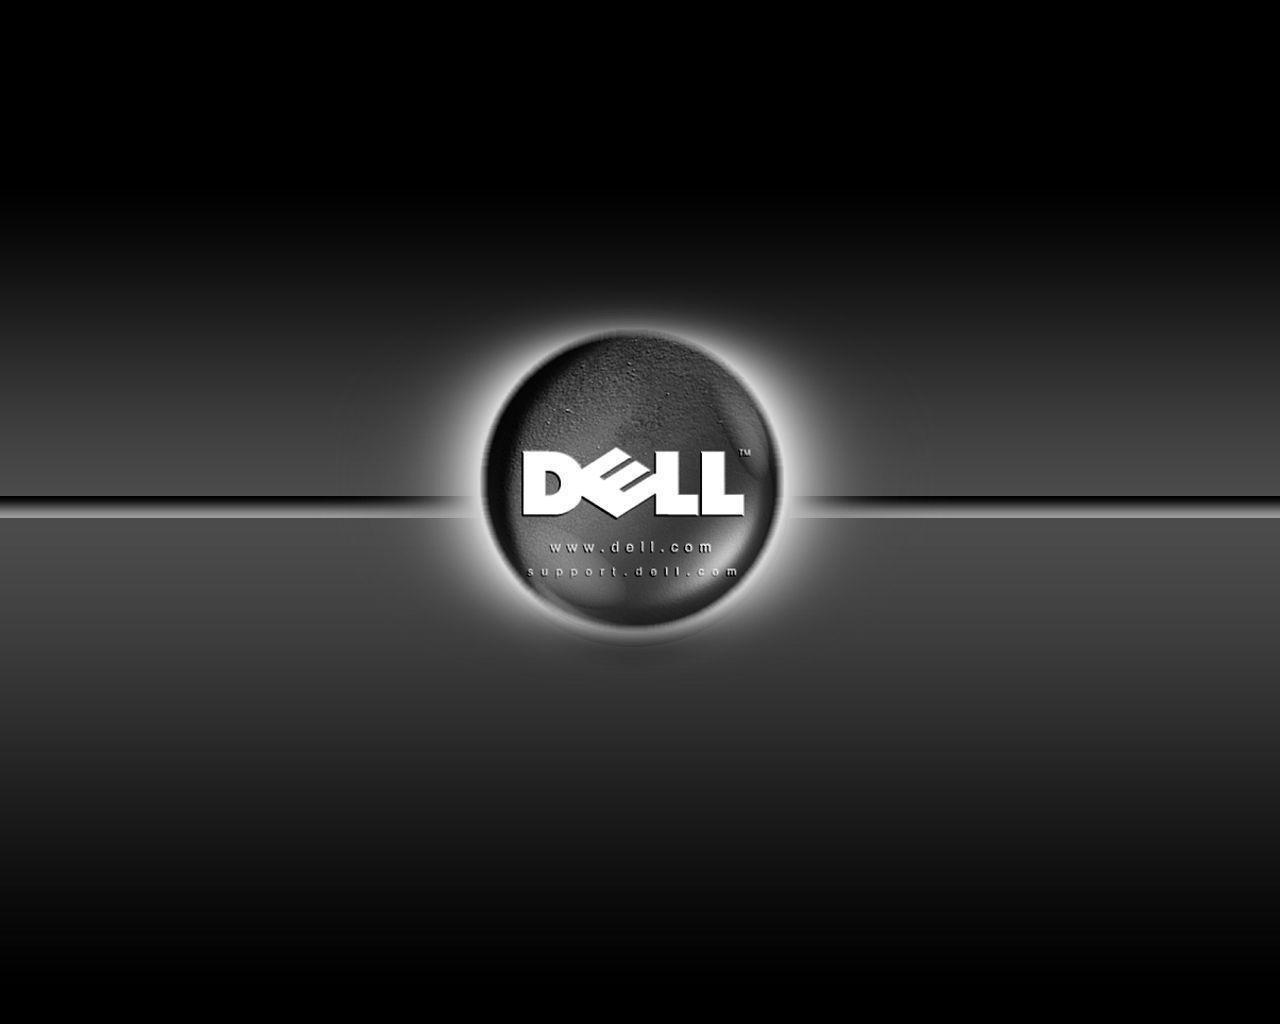 Dell Wallpaper Hd Black Dell Wallpaper Hd